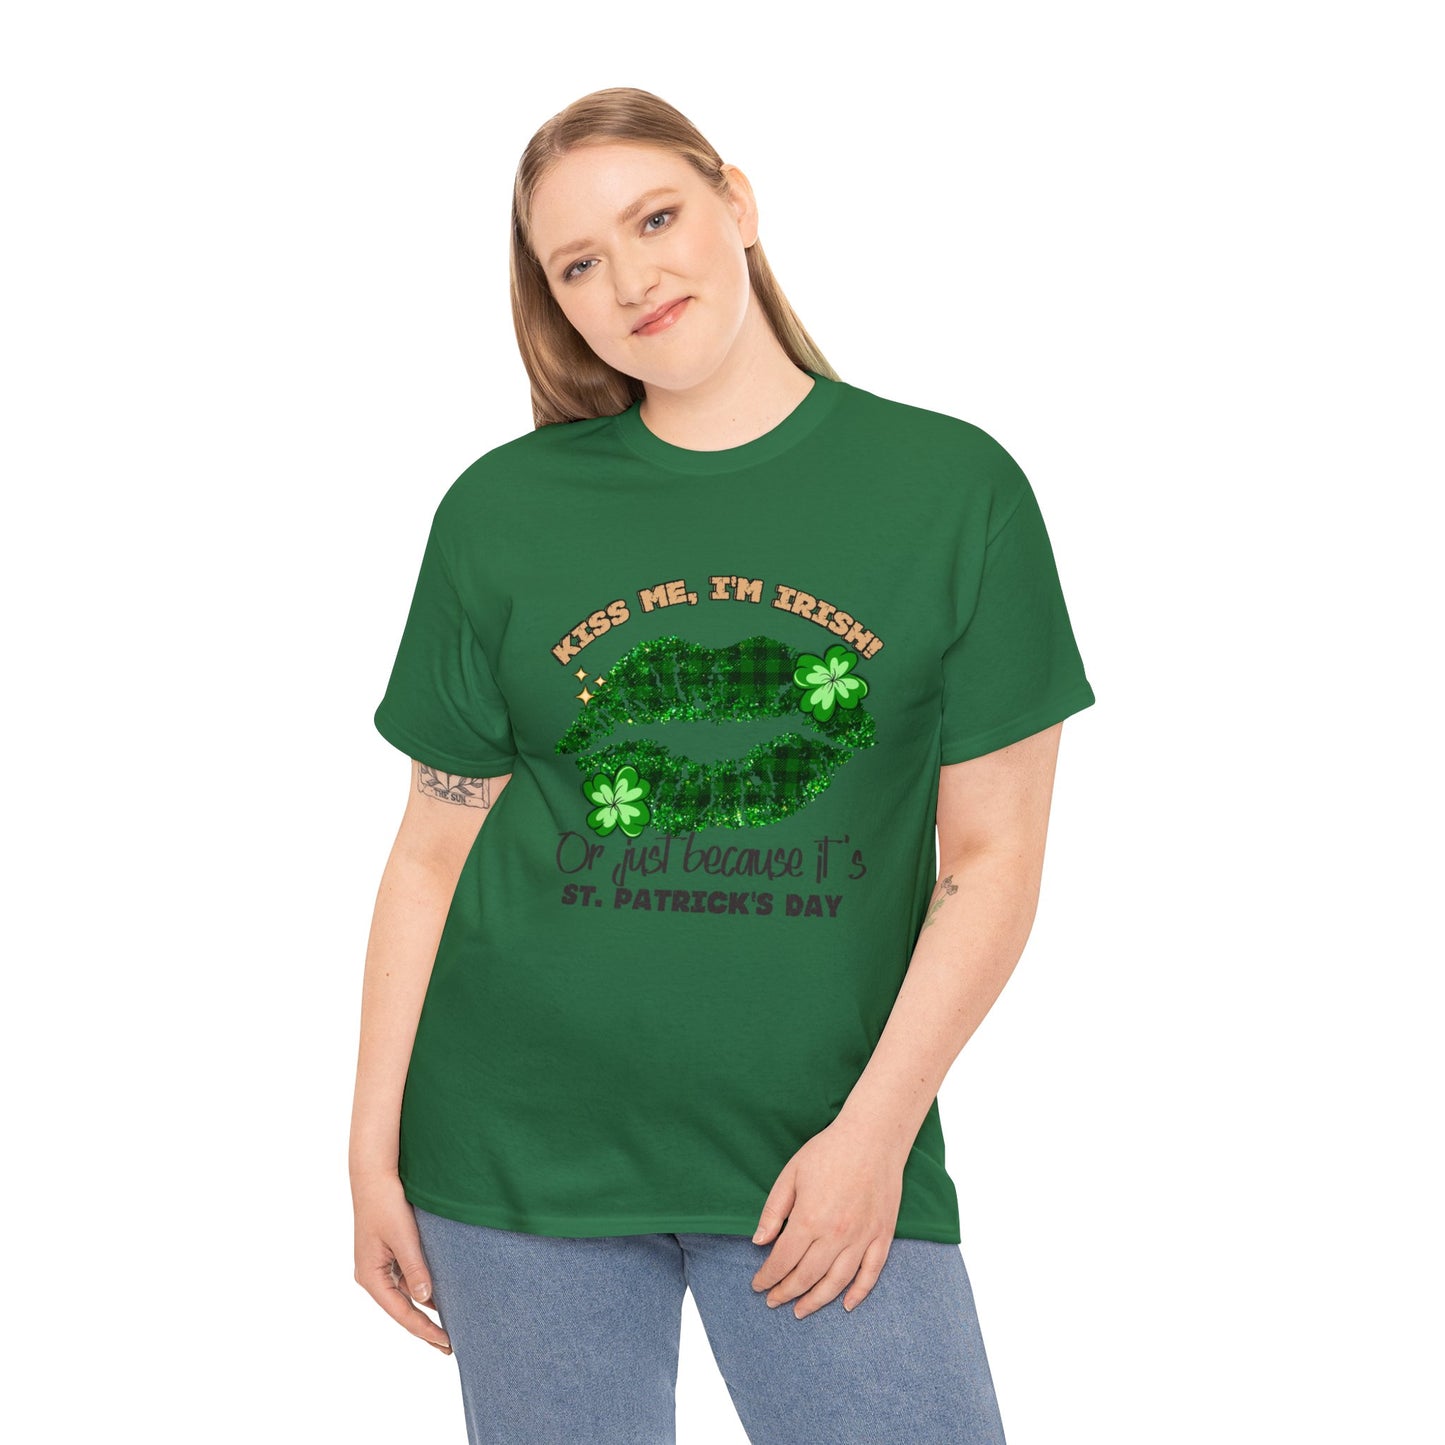 Kiss Me I'm Irish T-shirt "Irresistible 'Kiss Me I'm Irish' T-shirts for St. Patrick's Day." Unisex Heavy Cotton Tee